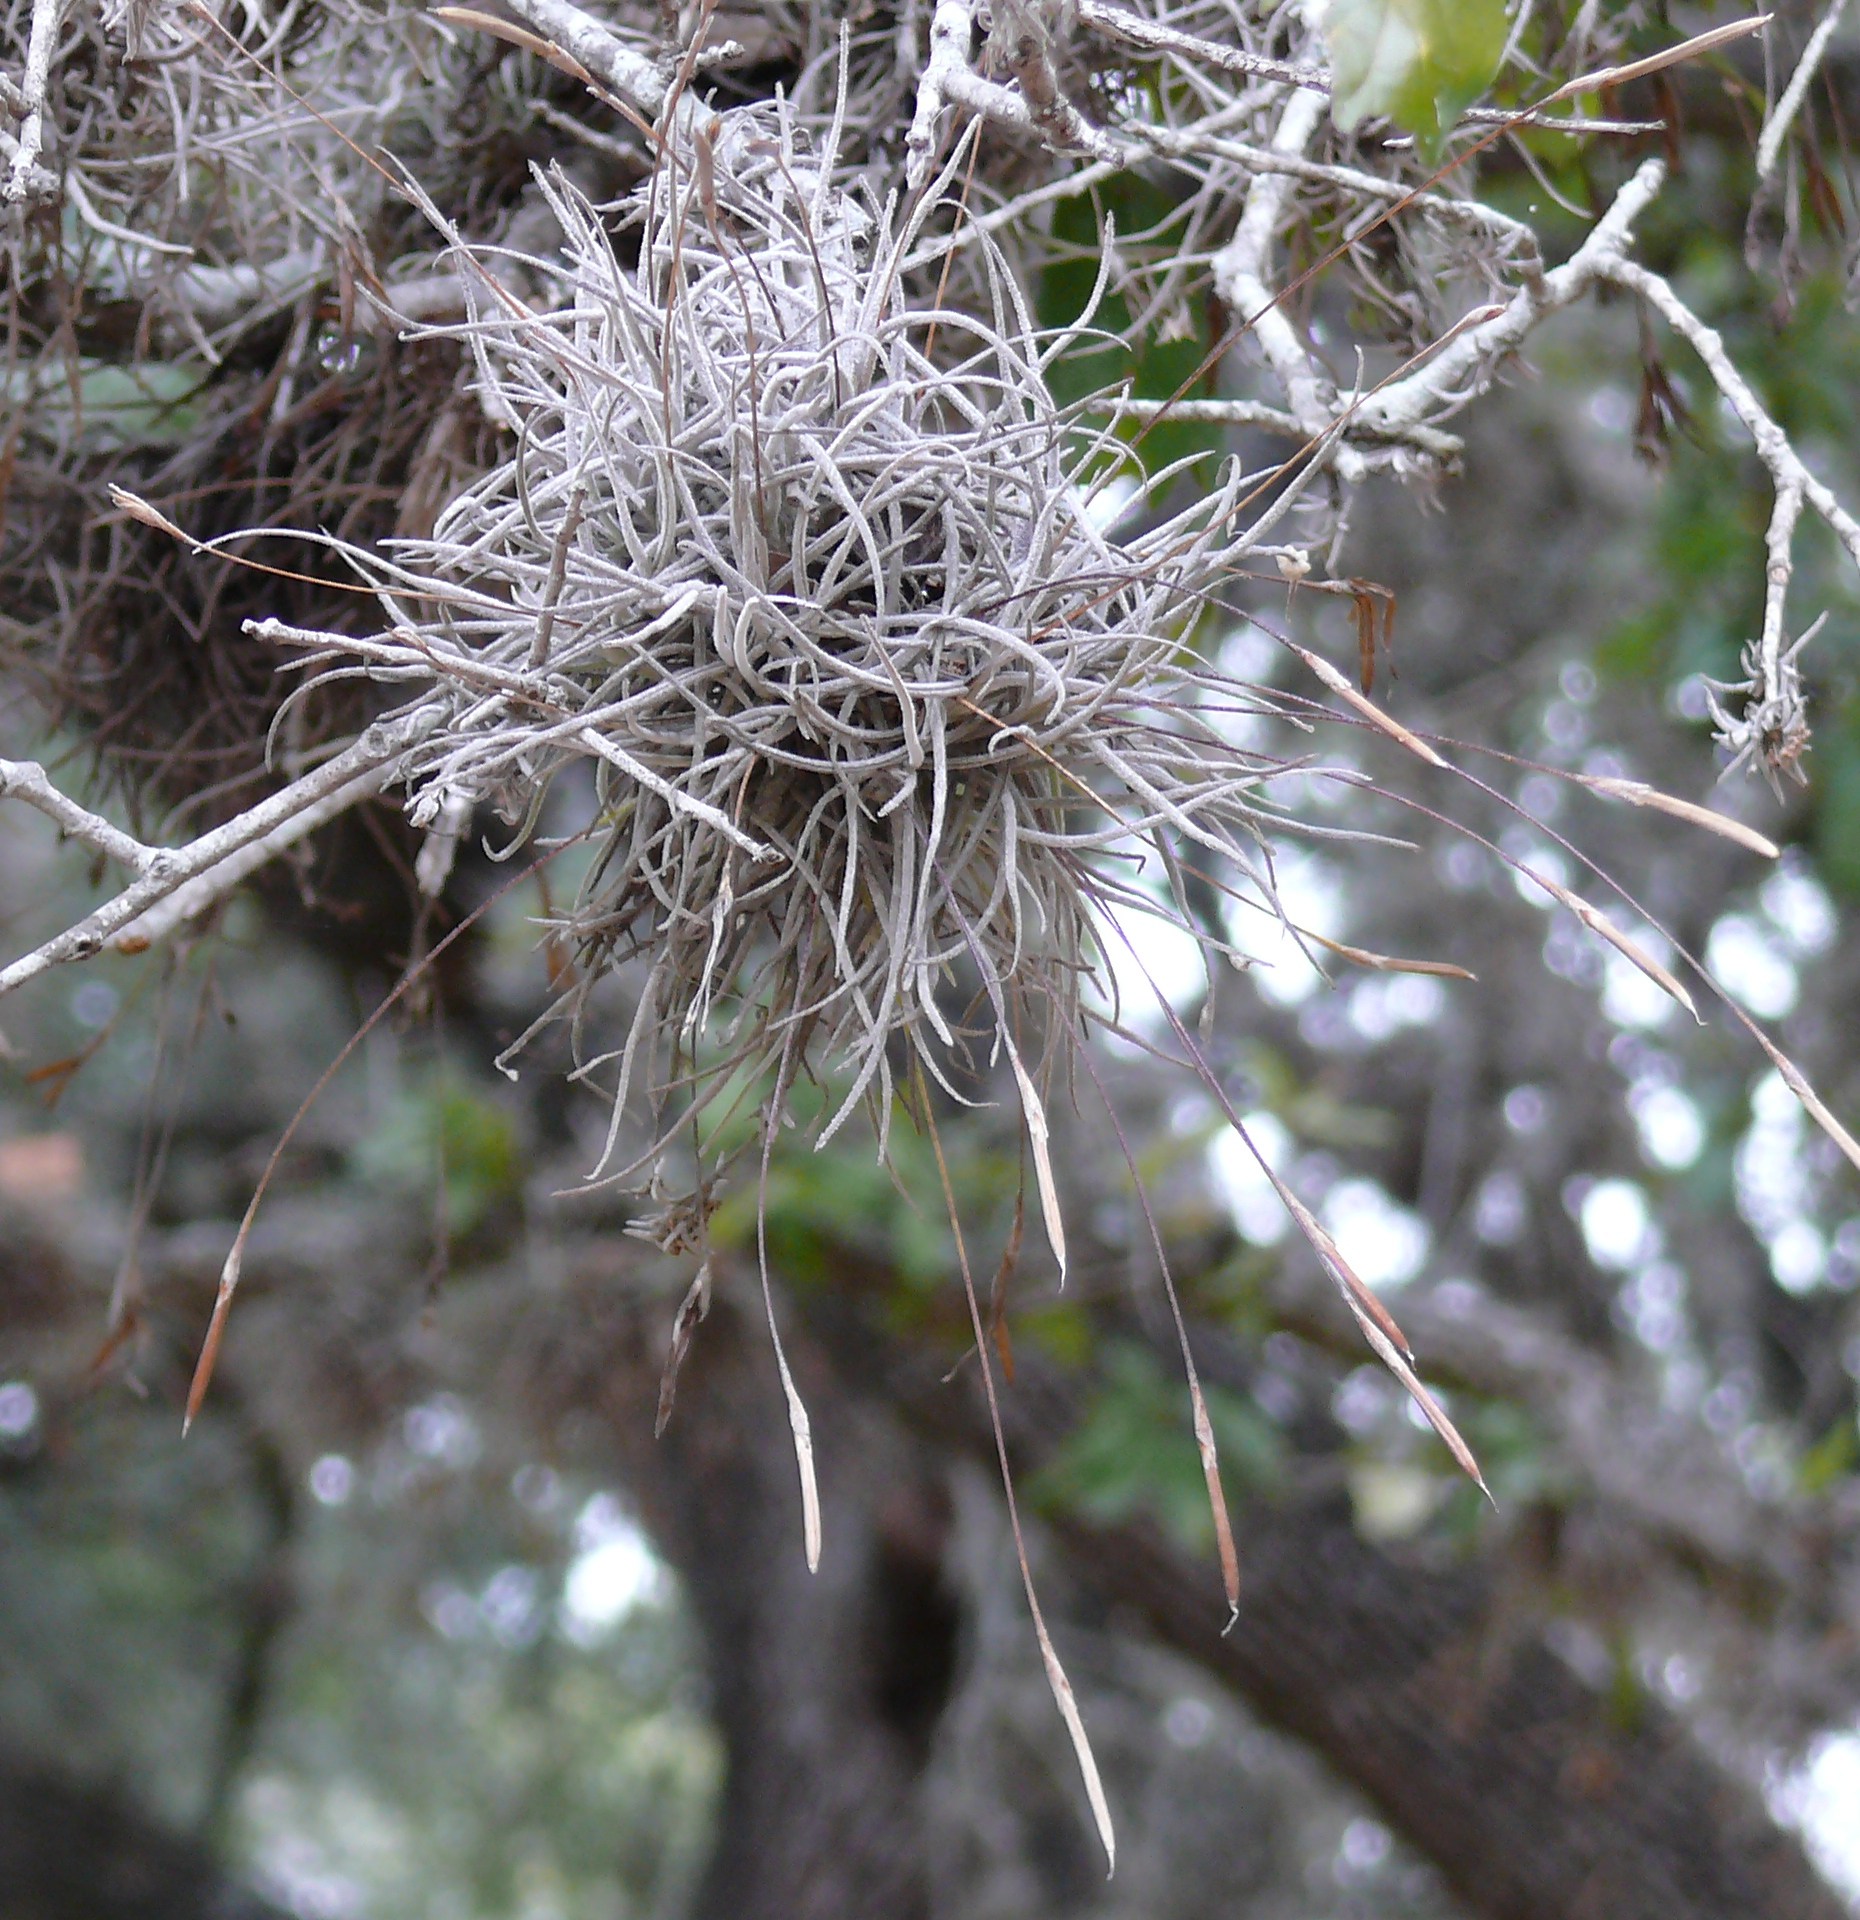 Ball moss - good or bad? | Native Plant Society of Texas